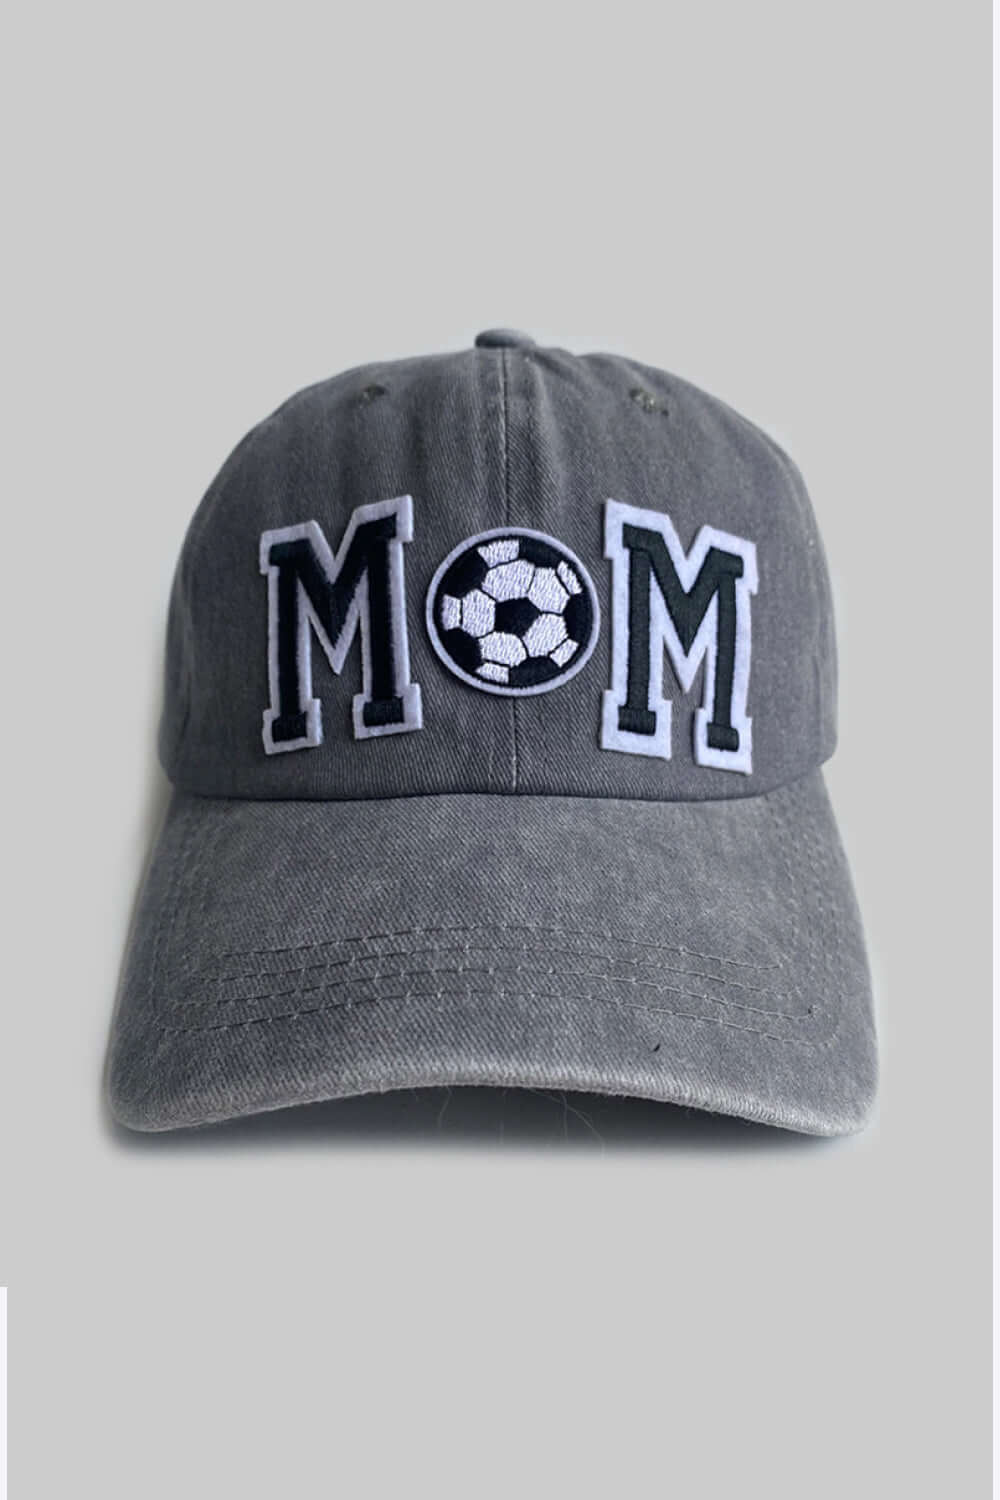 MOM Baseball Cap Stylish Comfortable Cotton Hat